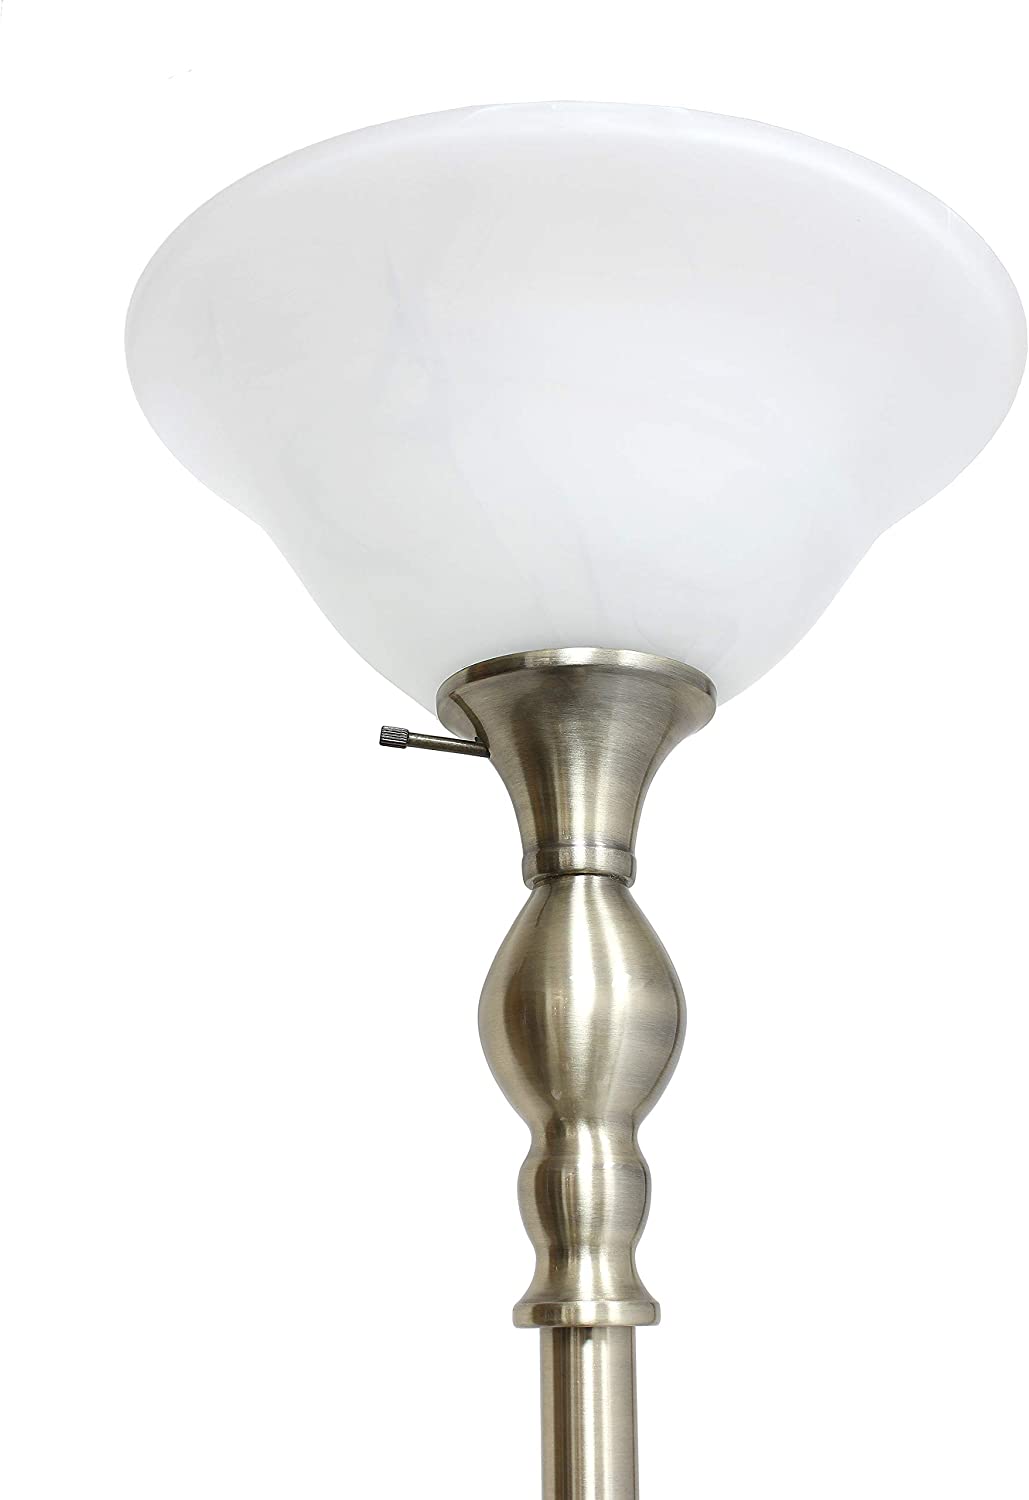 Elegant Designs LF2001-ABS 1 Light Torchiere Marbleized White Glass Shade Floor Lamp, Antique Brass